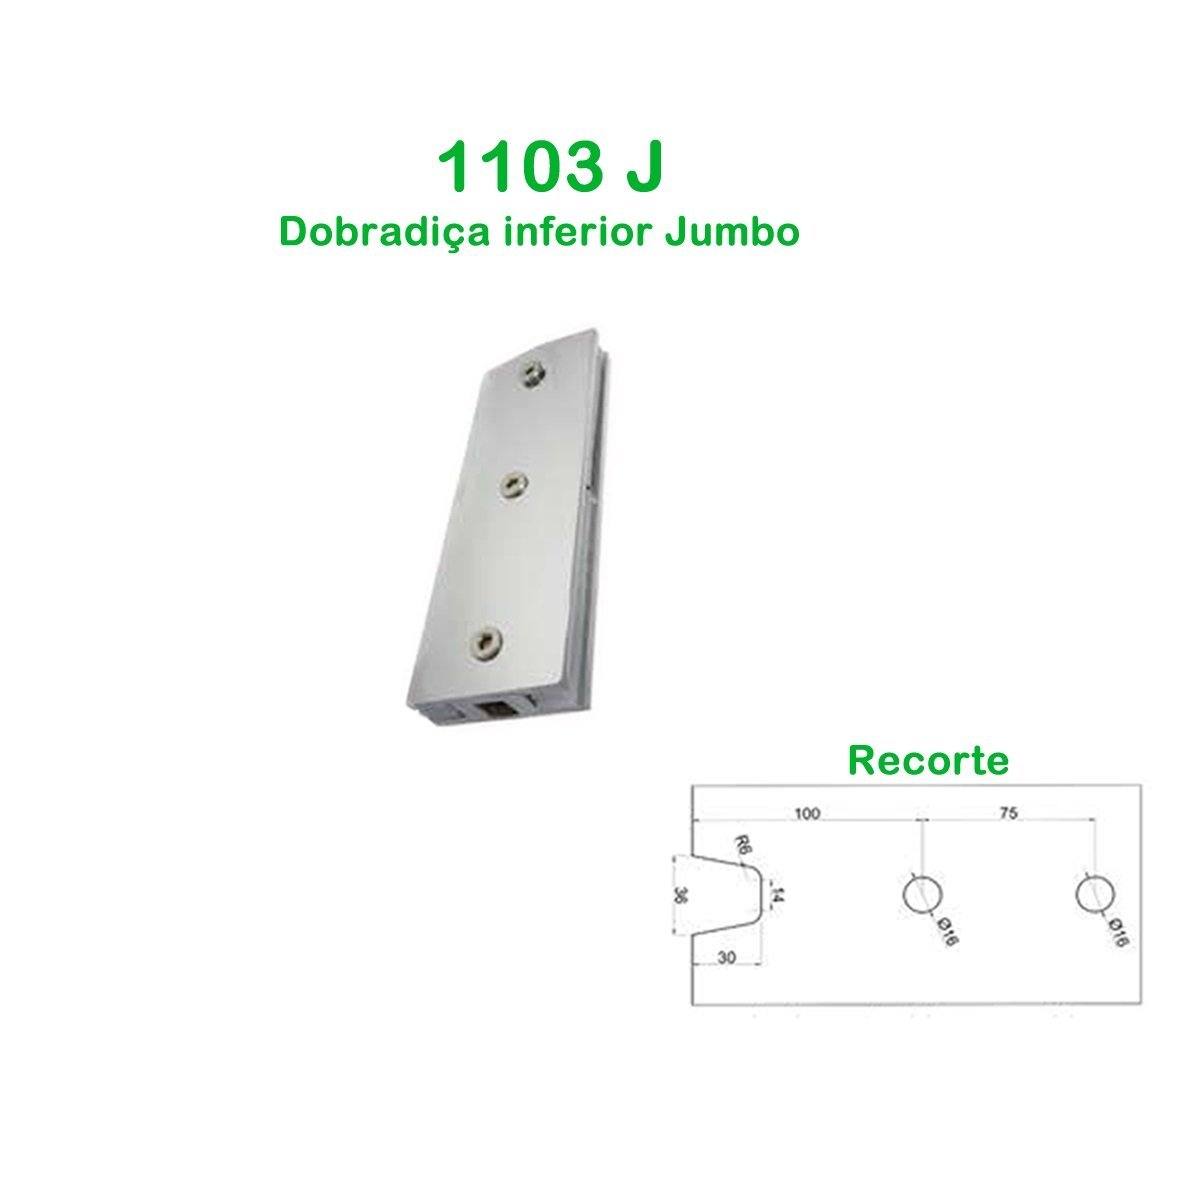 1103 J - Dobradiça inferior jumbo para porta pivotante de vidro temperado blindex - Cromado (zamak) - 2